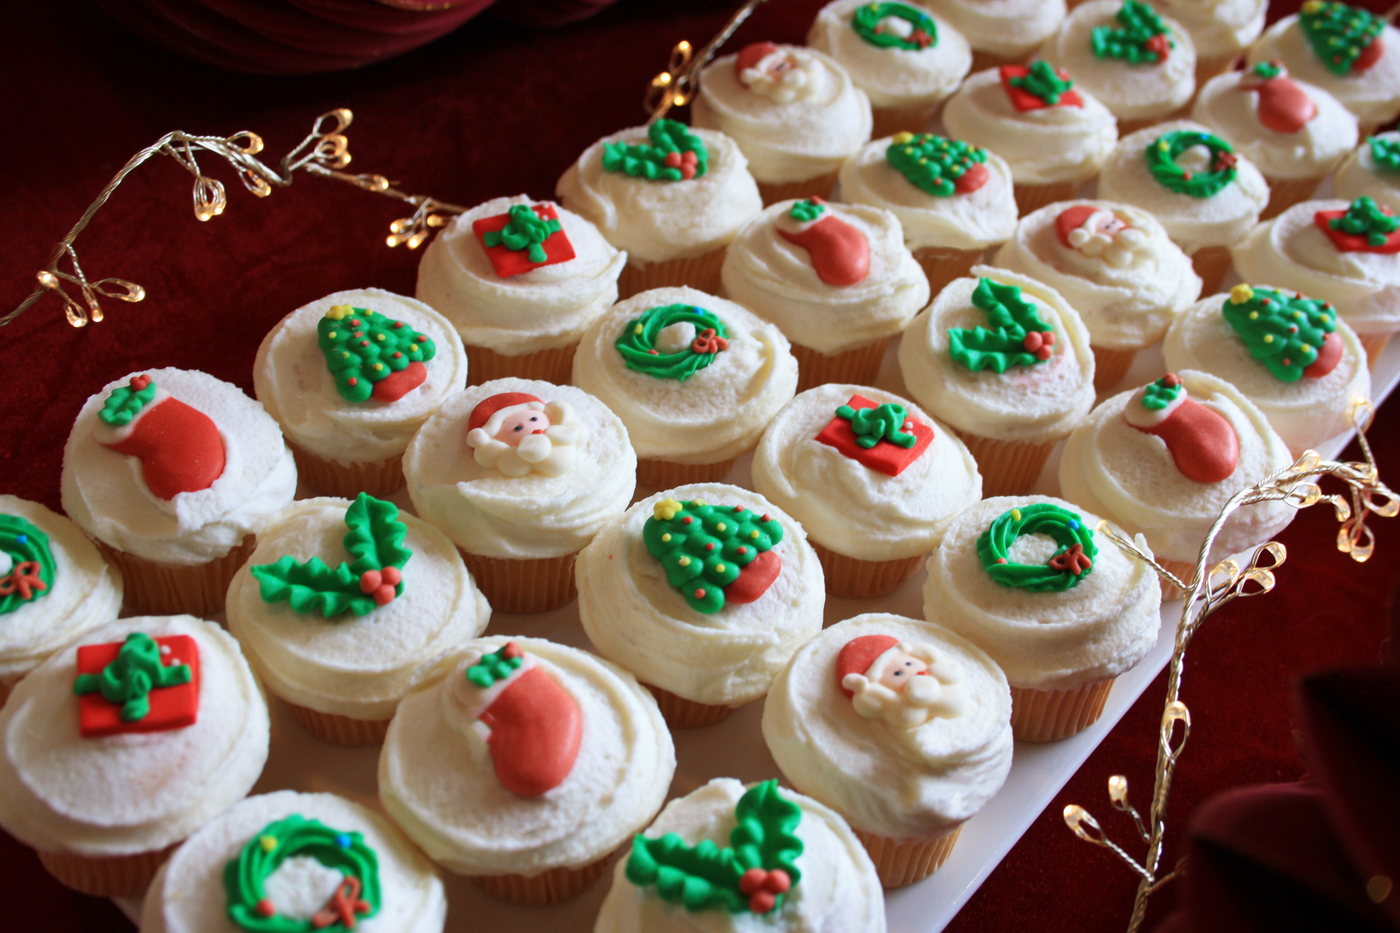 Classic Christmas Cupcakes